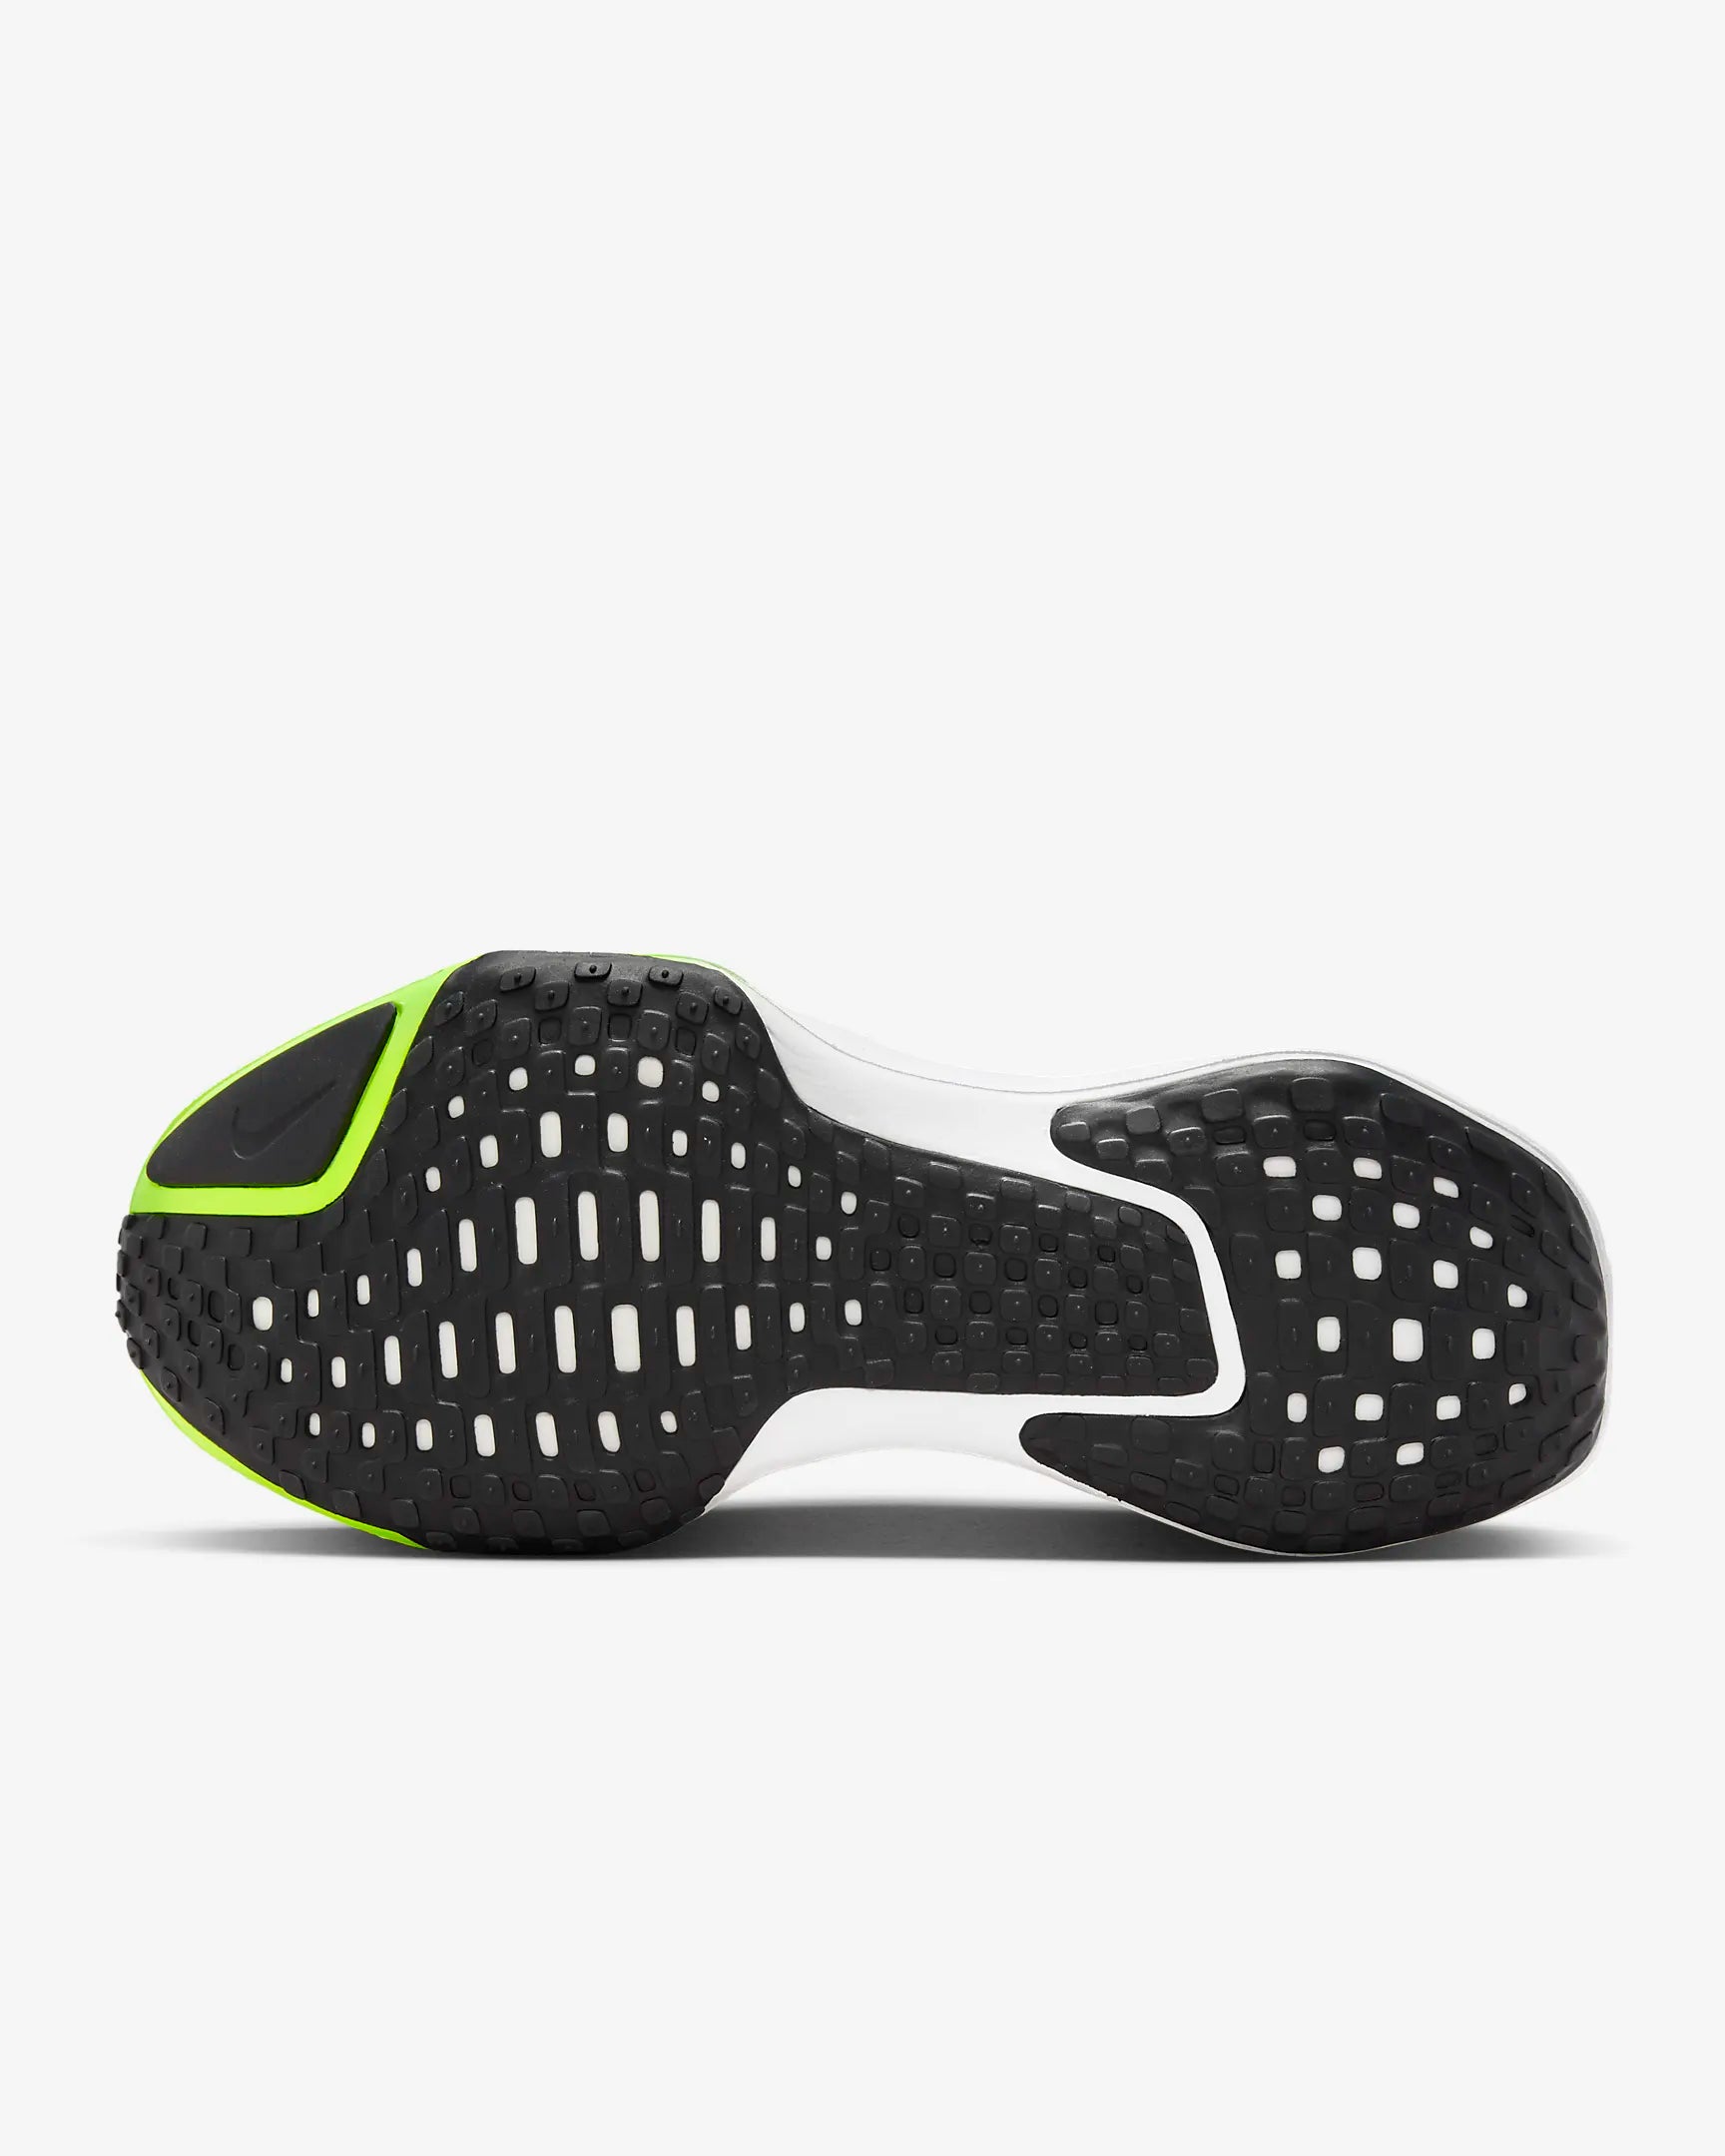 Nike Invincible 3 Men's Road Running Shoes-Green